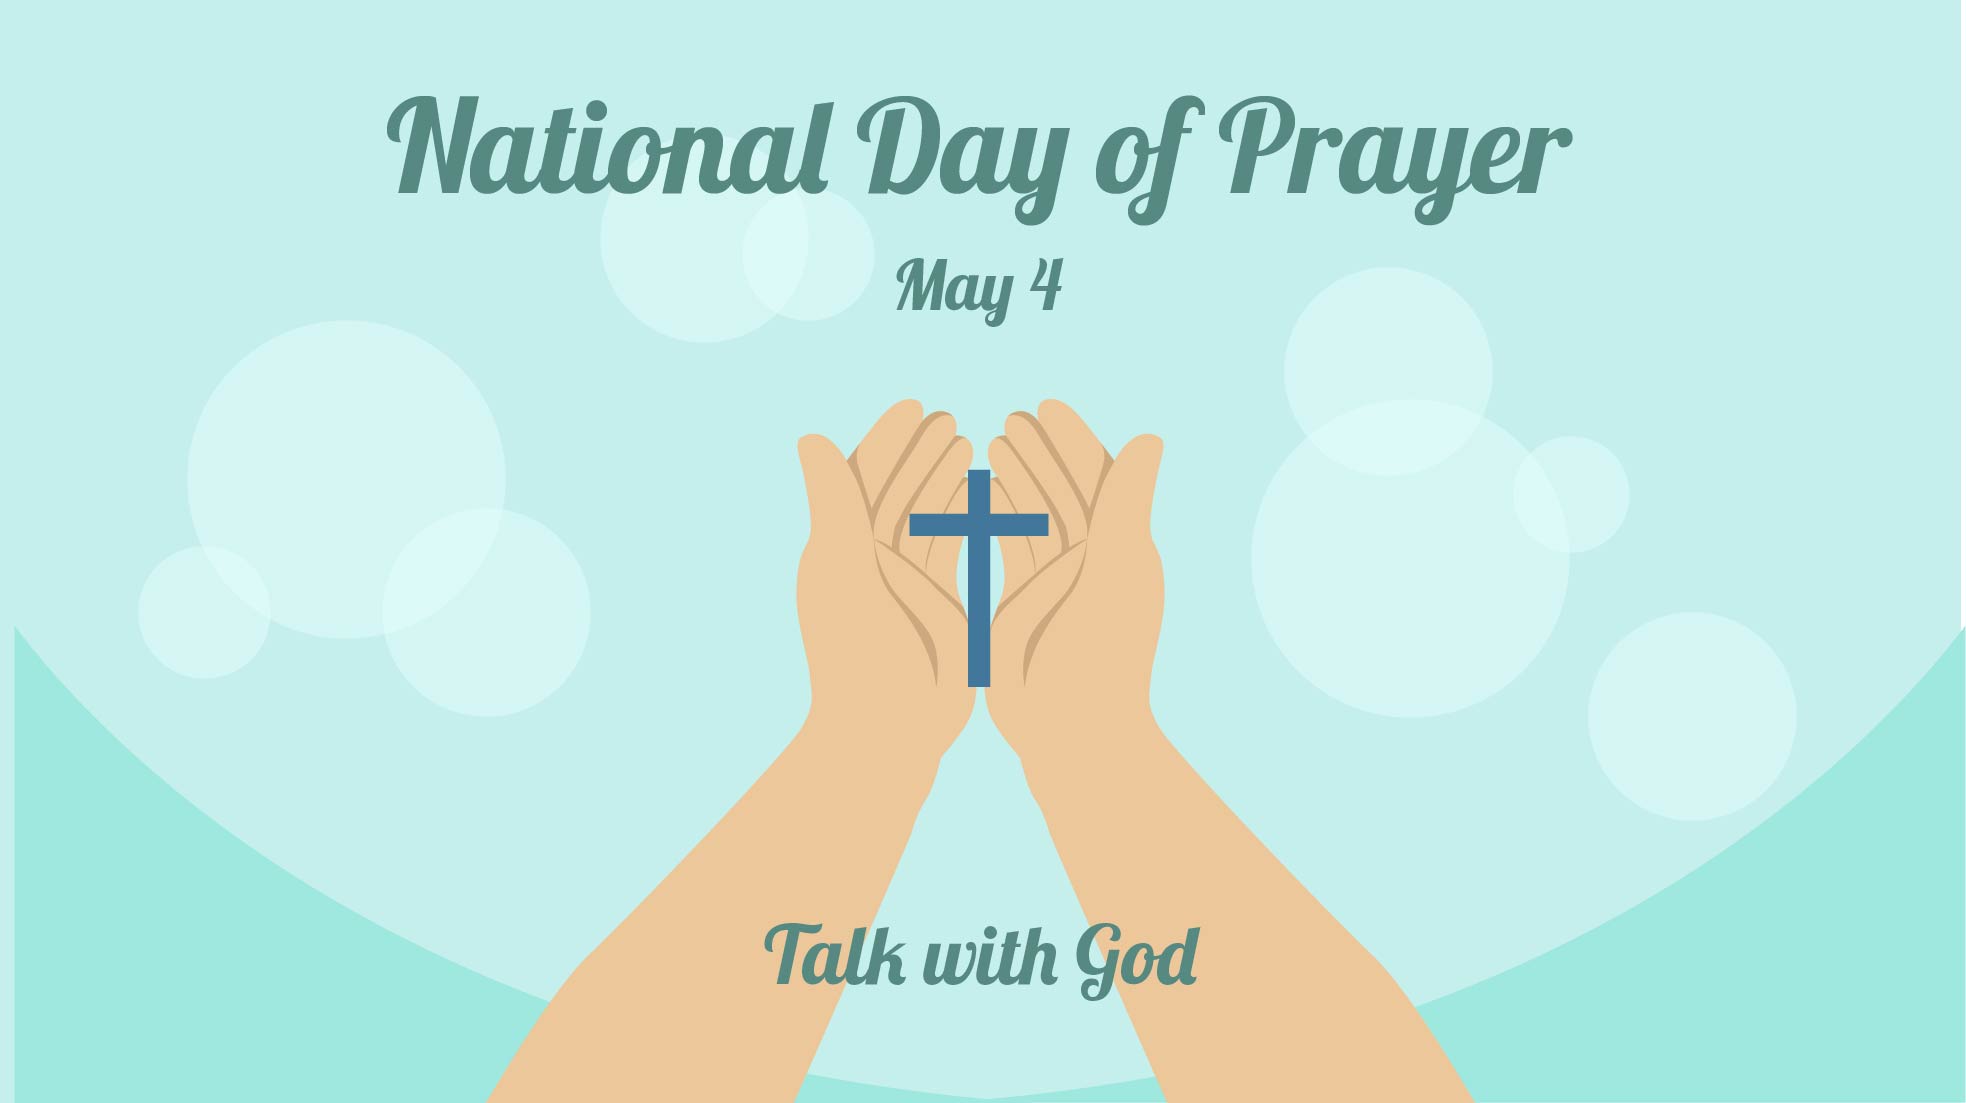 National Day of Prayer Flyer Background